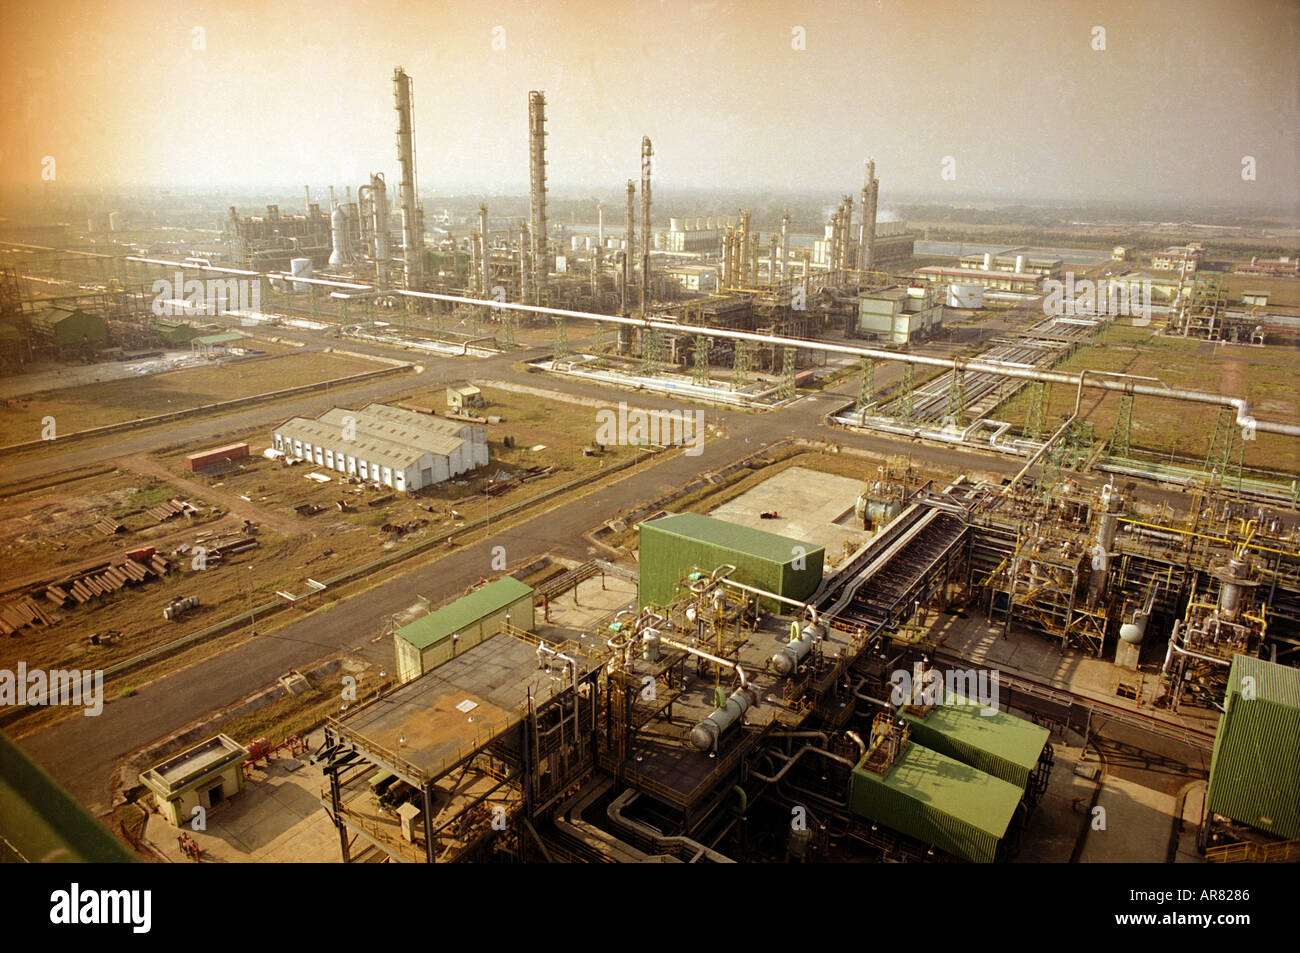 haldia-petrochemicals-ltd-india-stock-photo-1540741-alamy